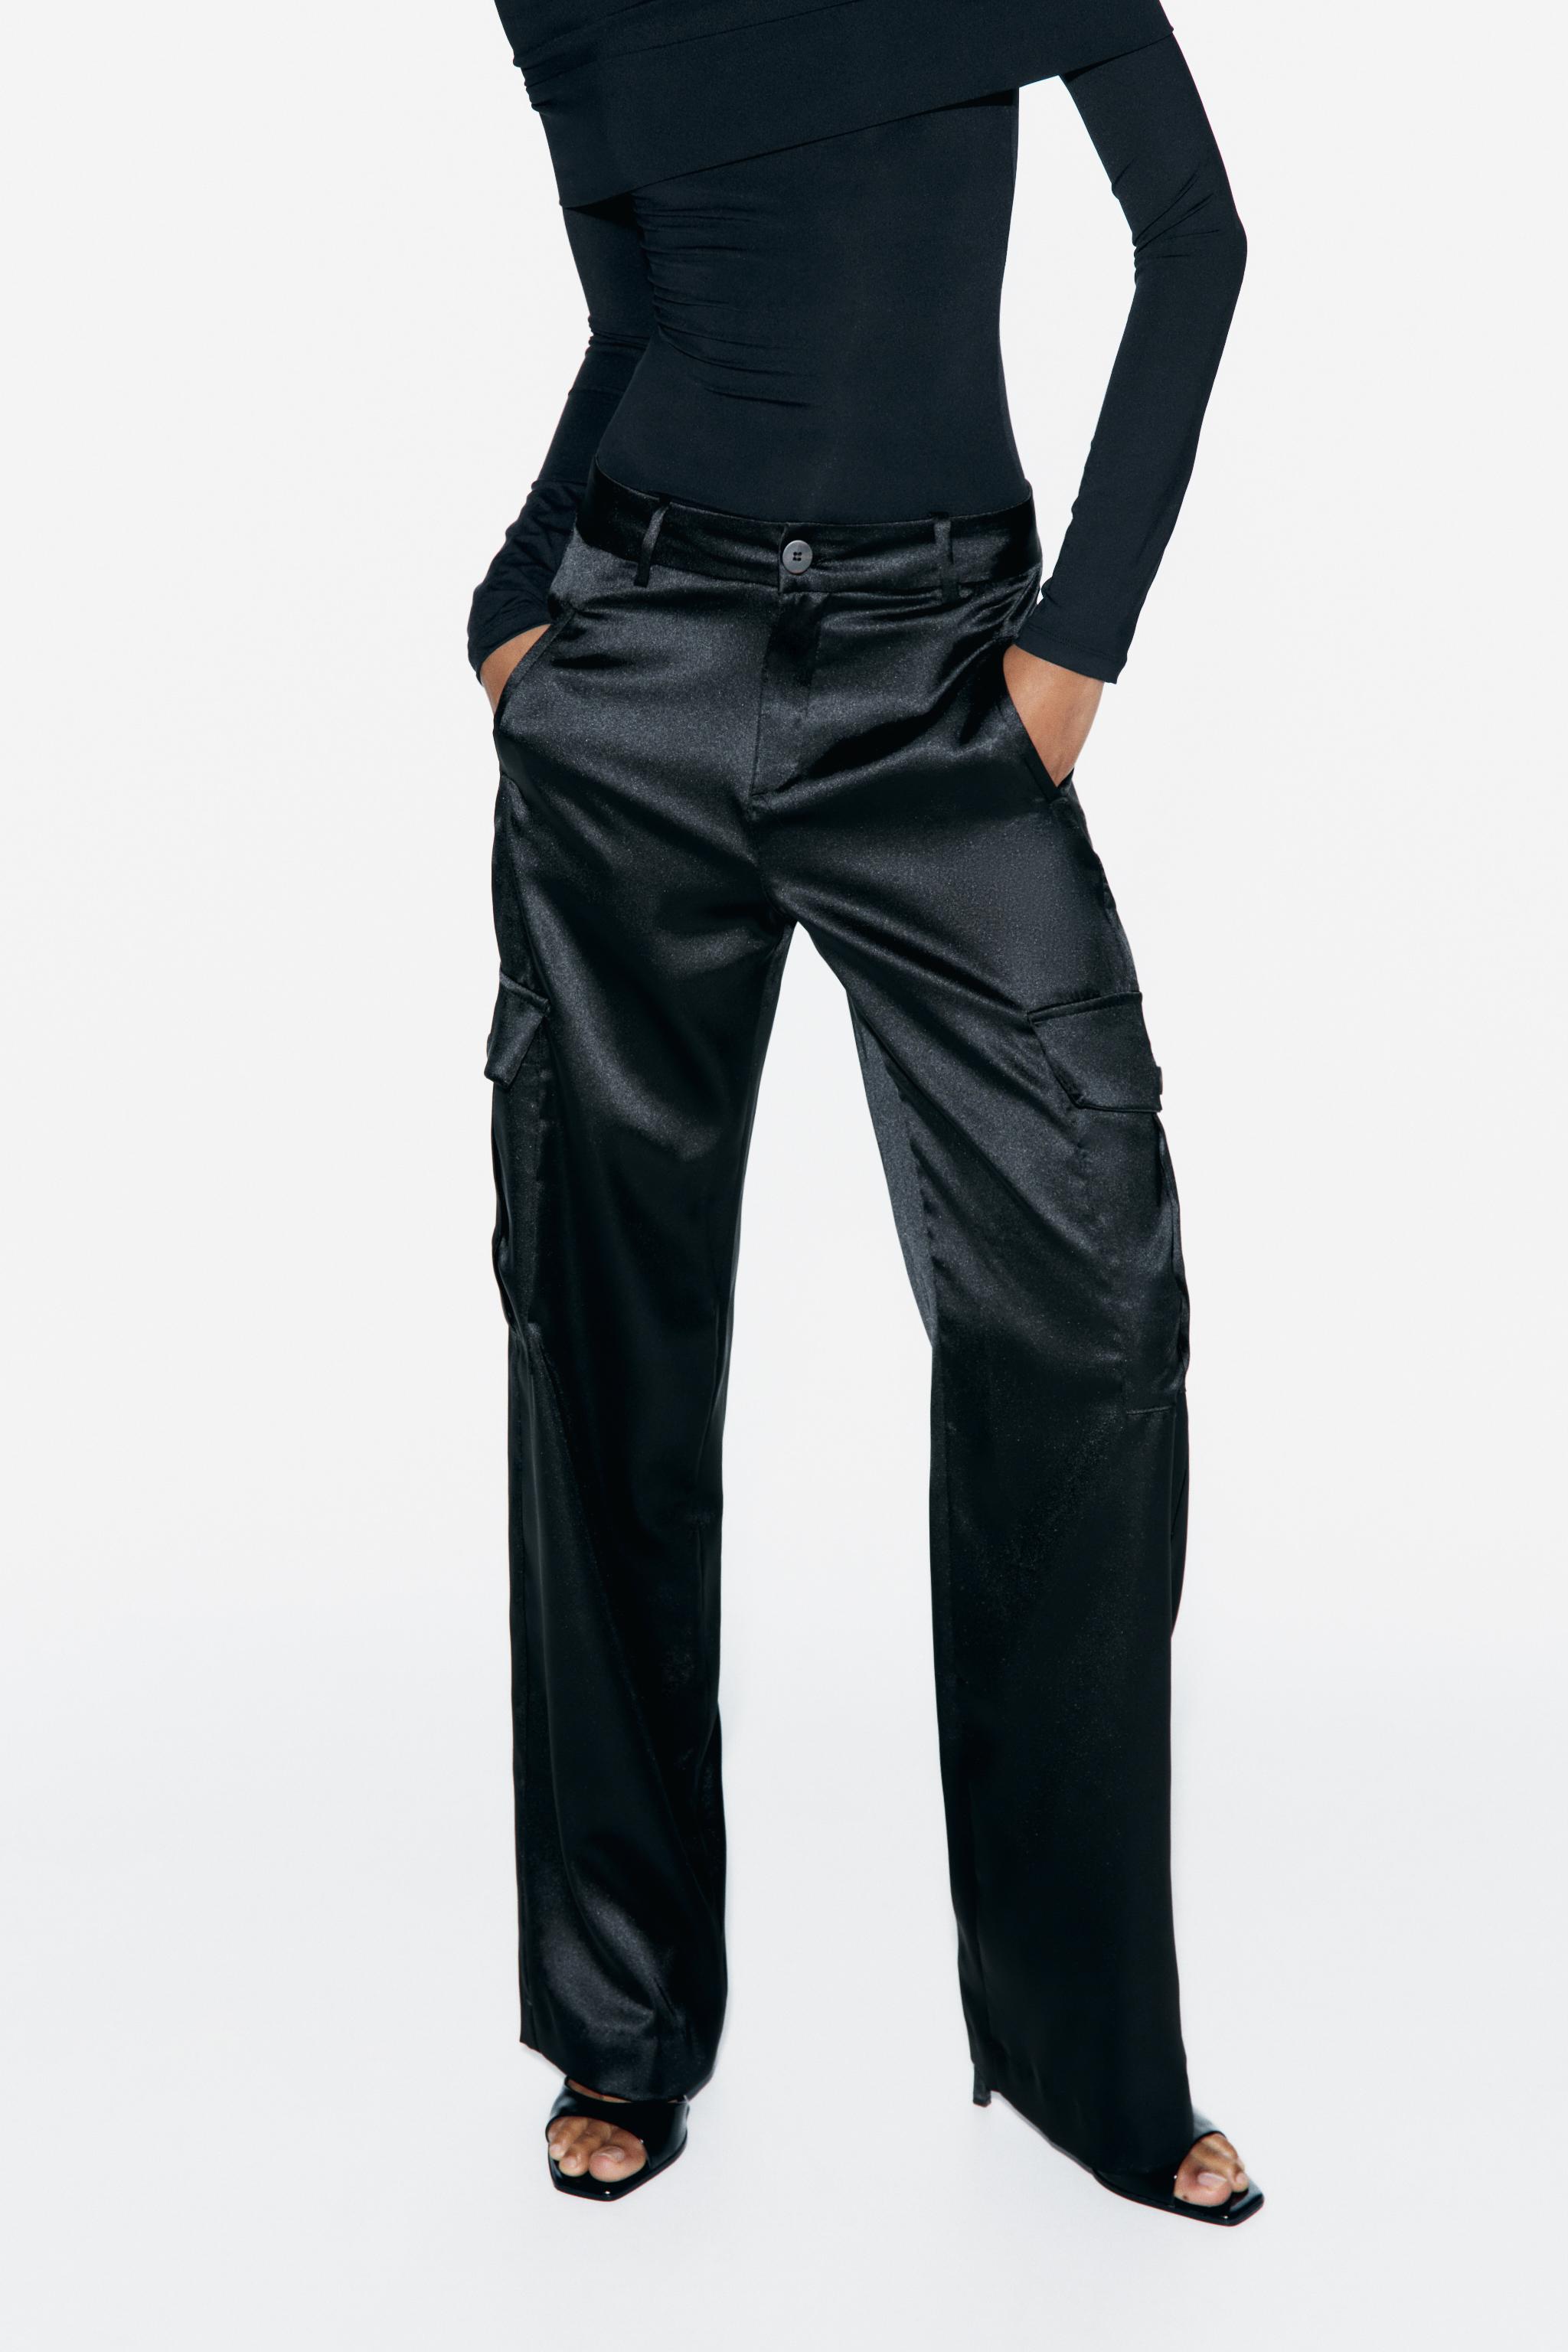 New $129 Zara Surplus Flare Cargo Pants SRPLS TGHT 05 Medium Large